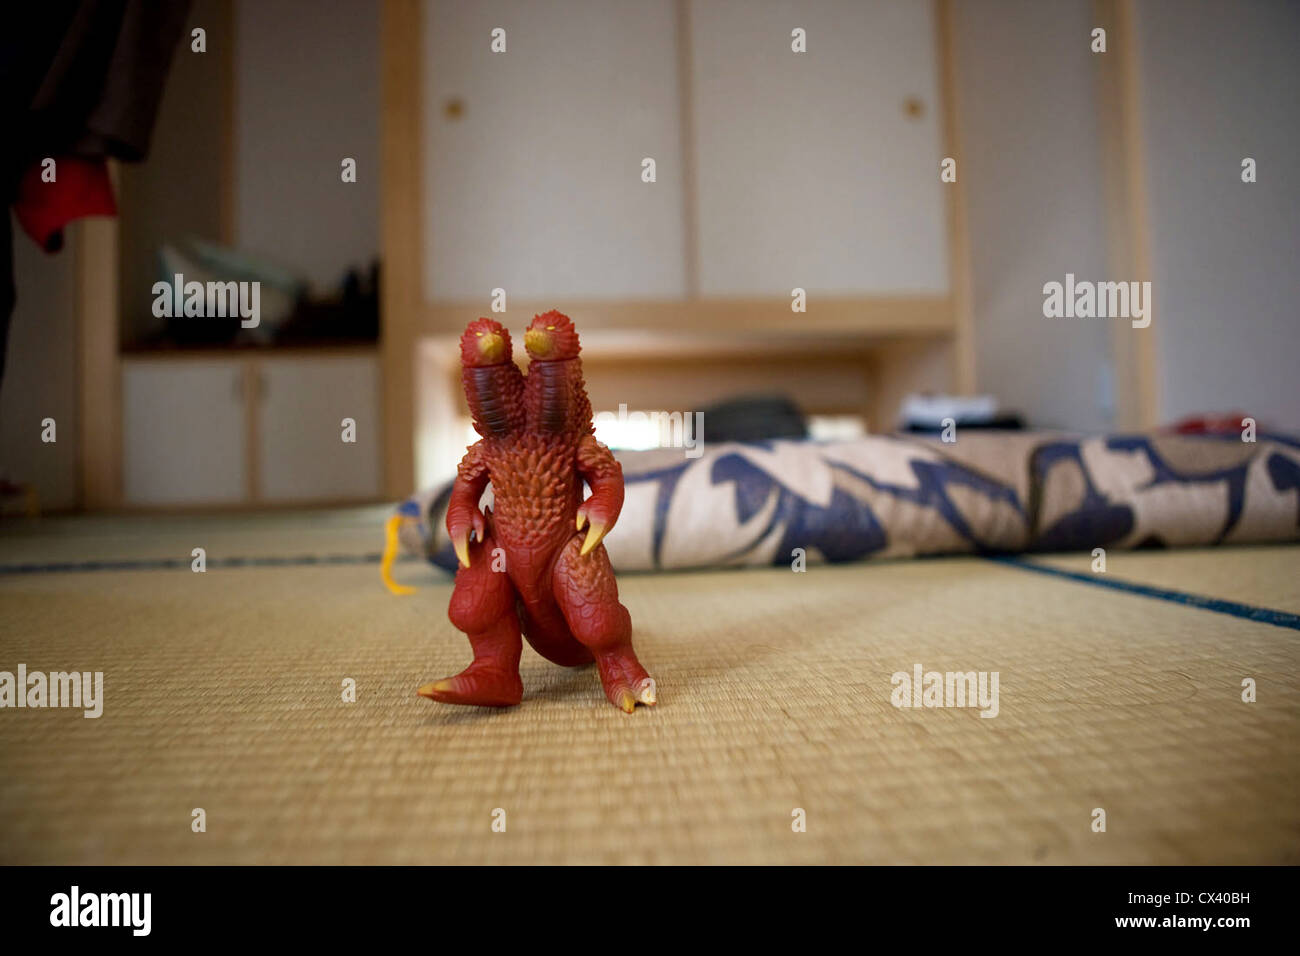 Japanese Kaiju monster action figure on a tatami floor in Japan. Stock Photo